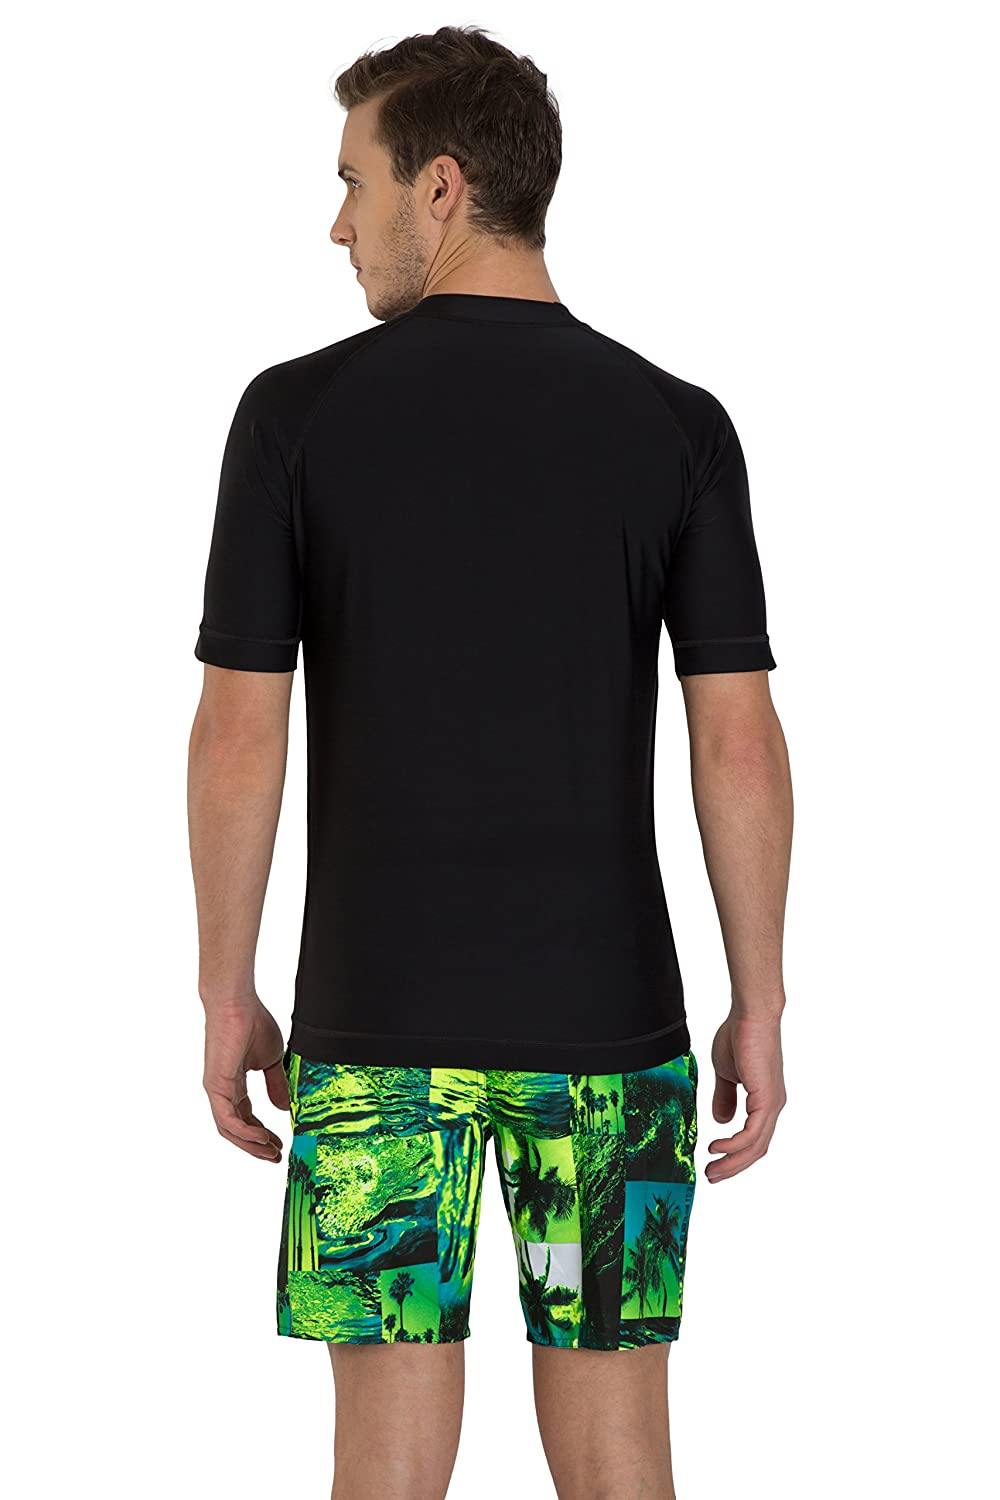 Speedo Male Swimwear Short Sleeve Suntop (8PSM013503_Black/White) - Best Price online Prokicksports.com